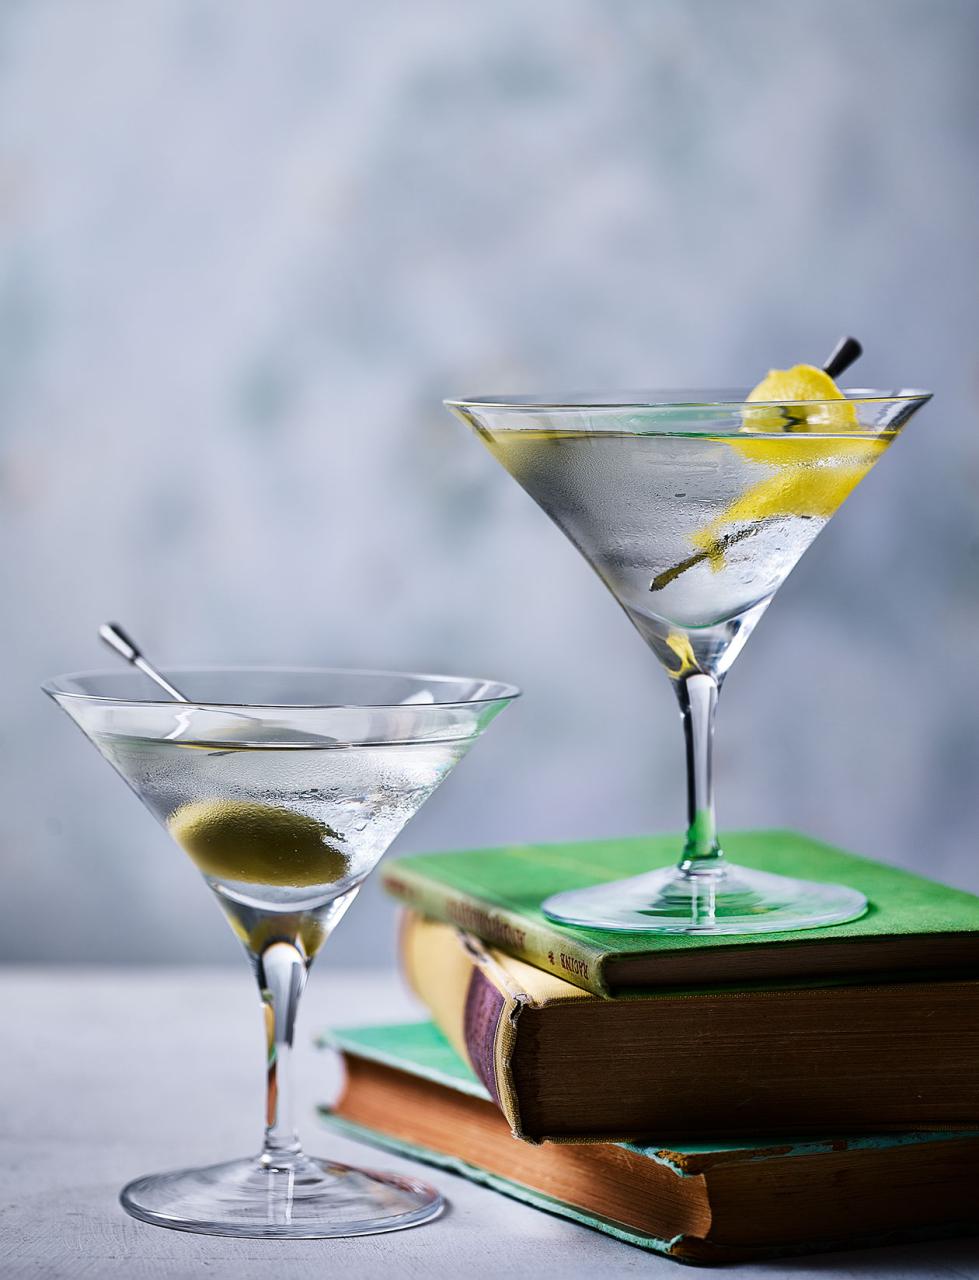 How To Make A Martini